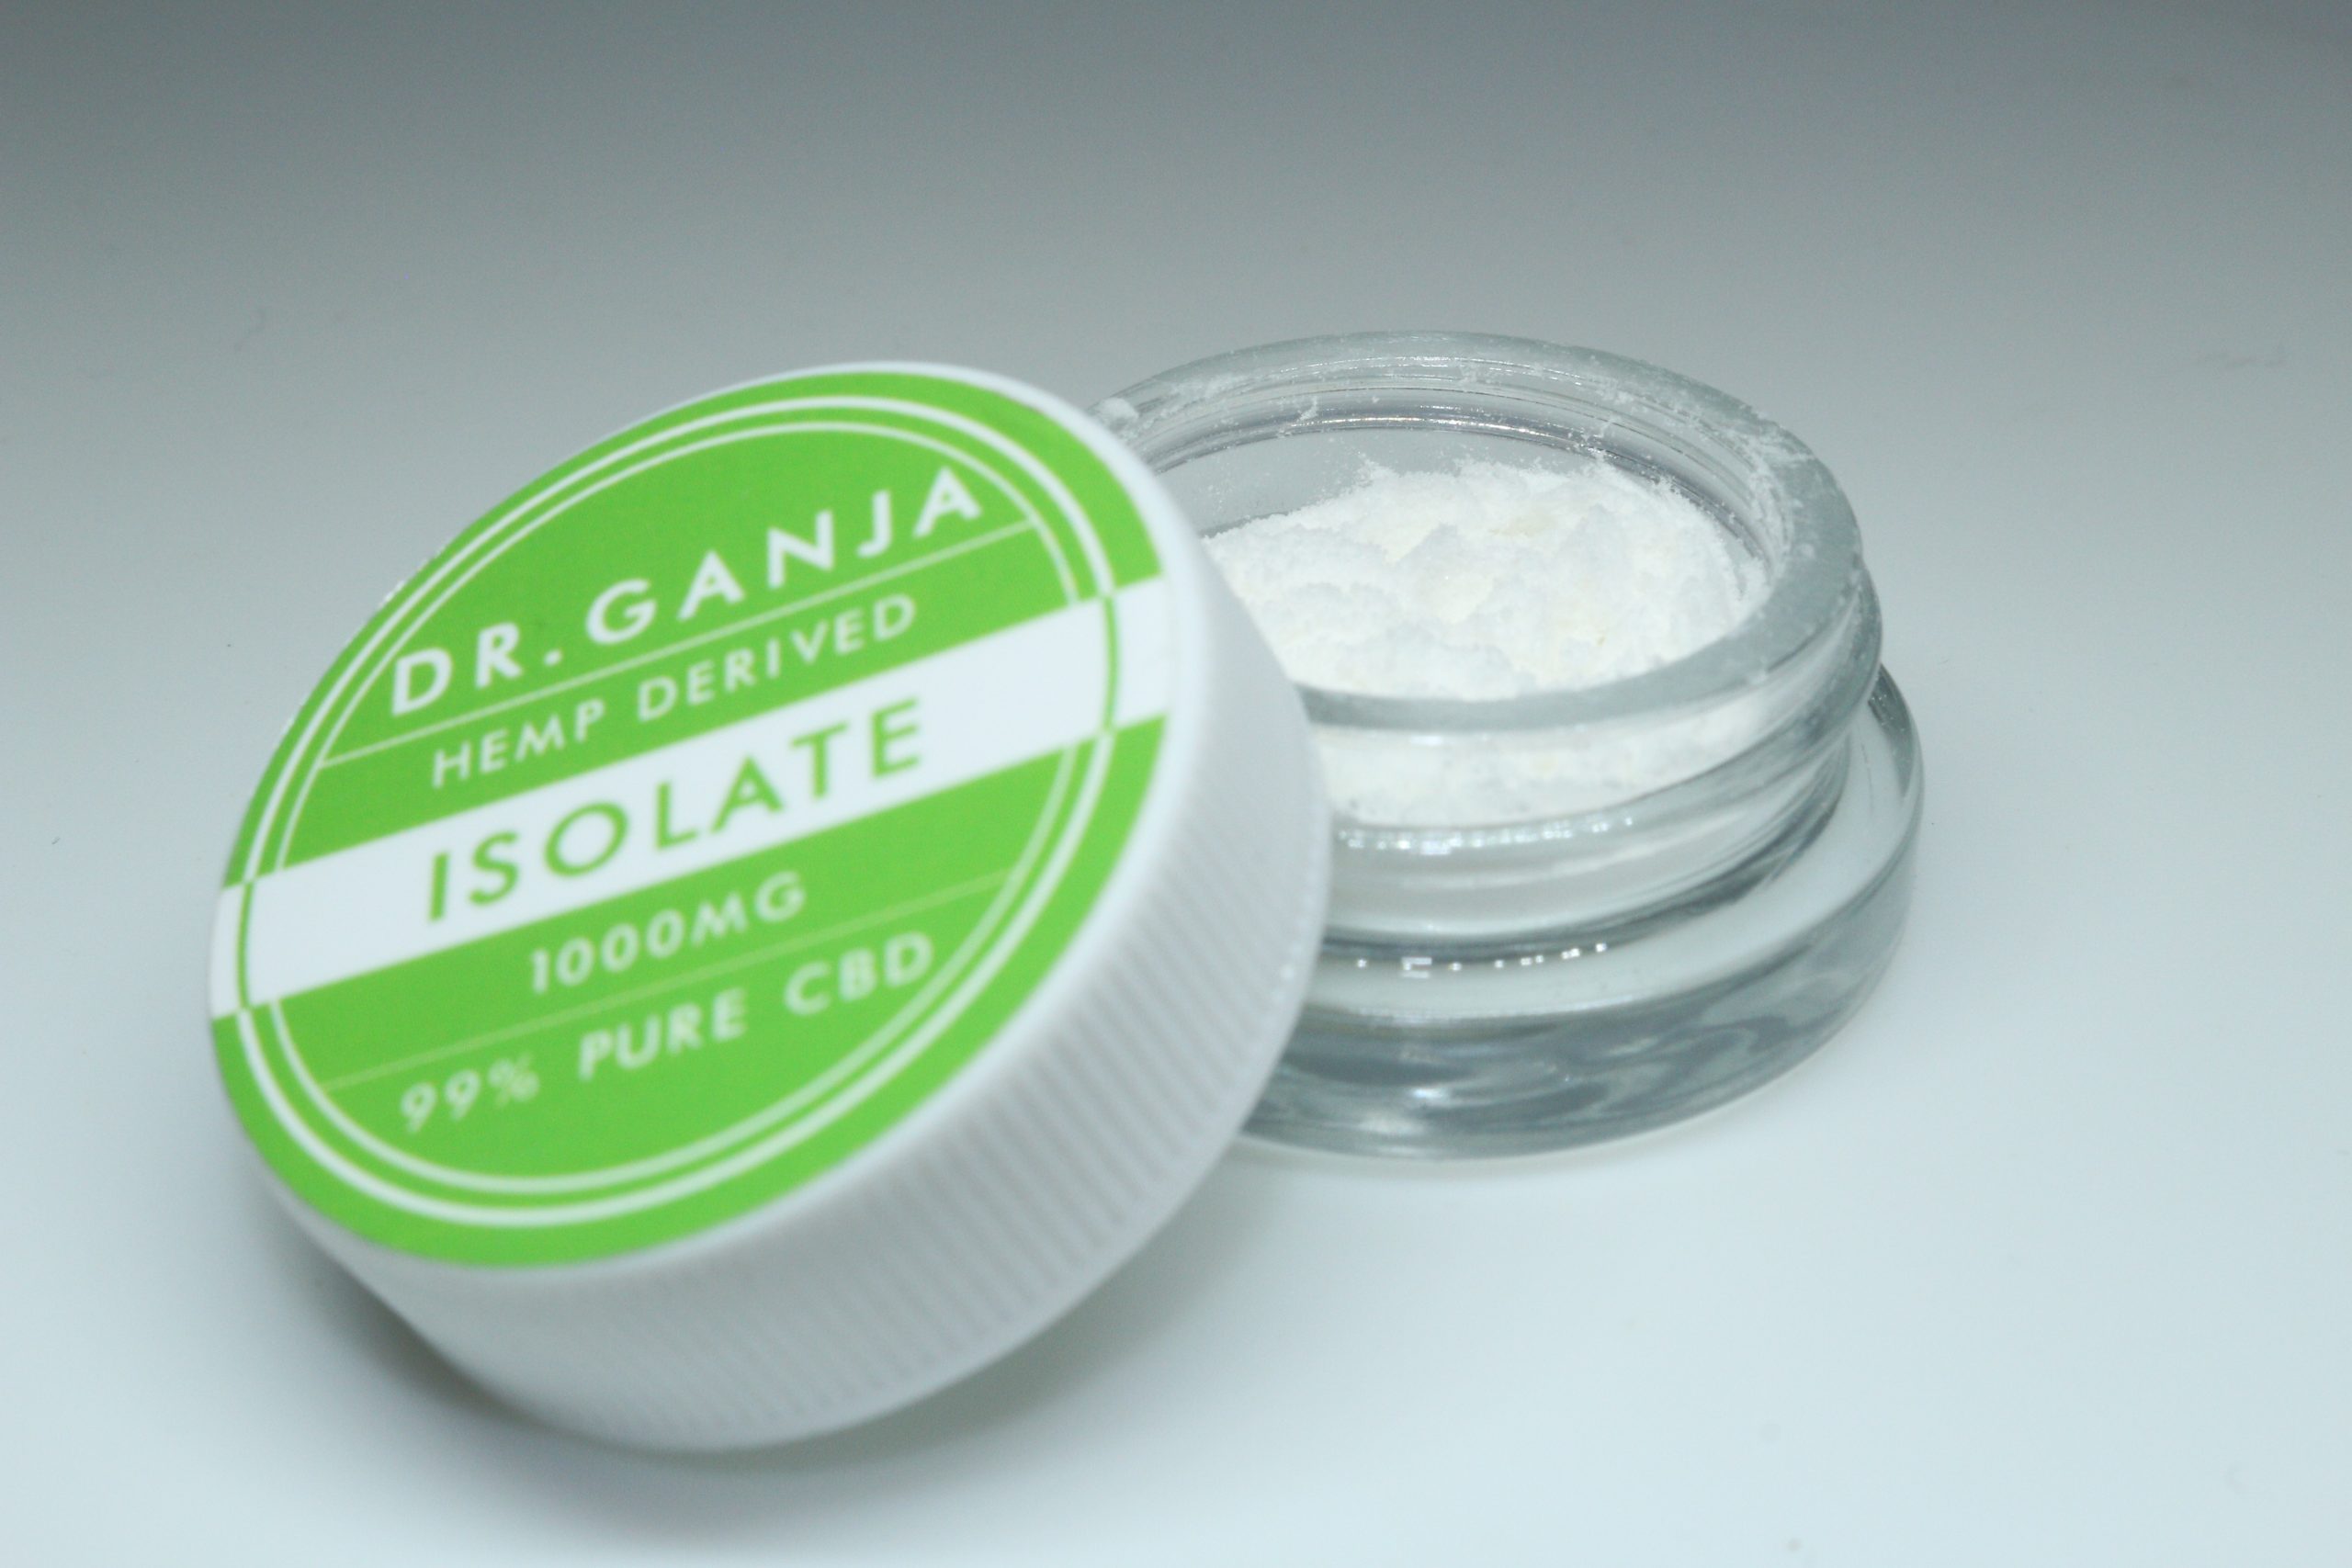 99% Pure CBD Isolate Powder Derived from Hemp 14 grams | Dr.Ganja